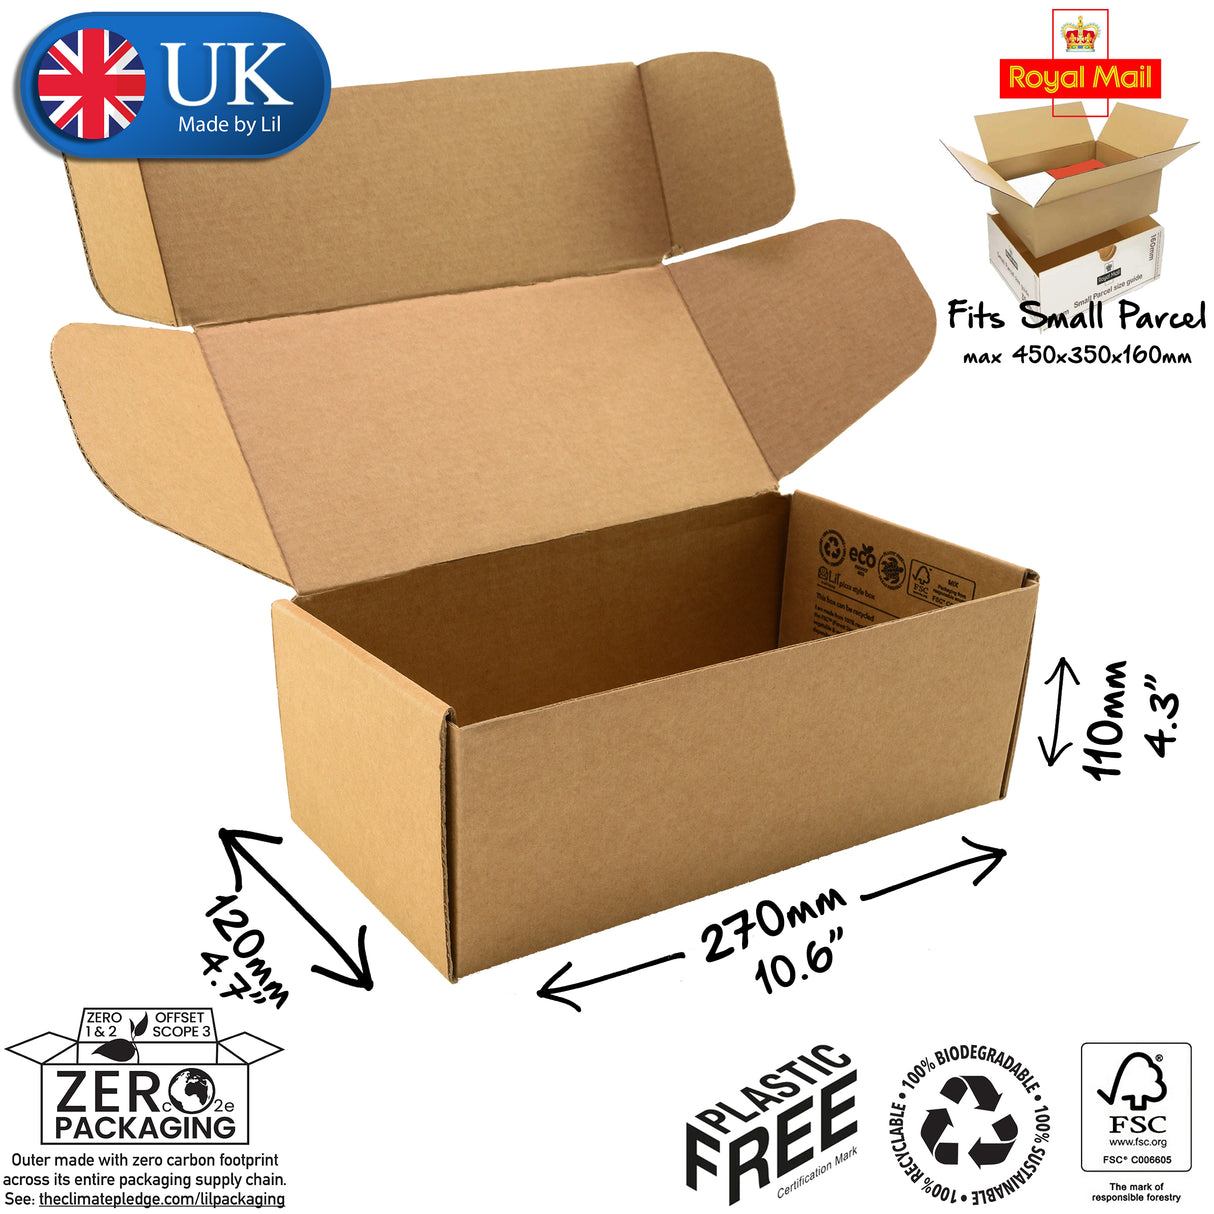 27x12x11cm Cardboard Postal Box Lil Packaging